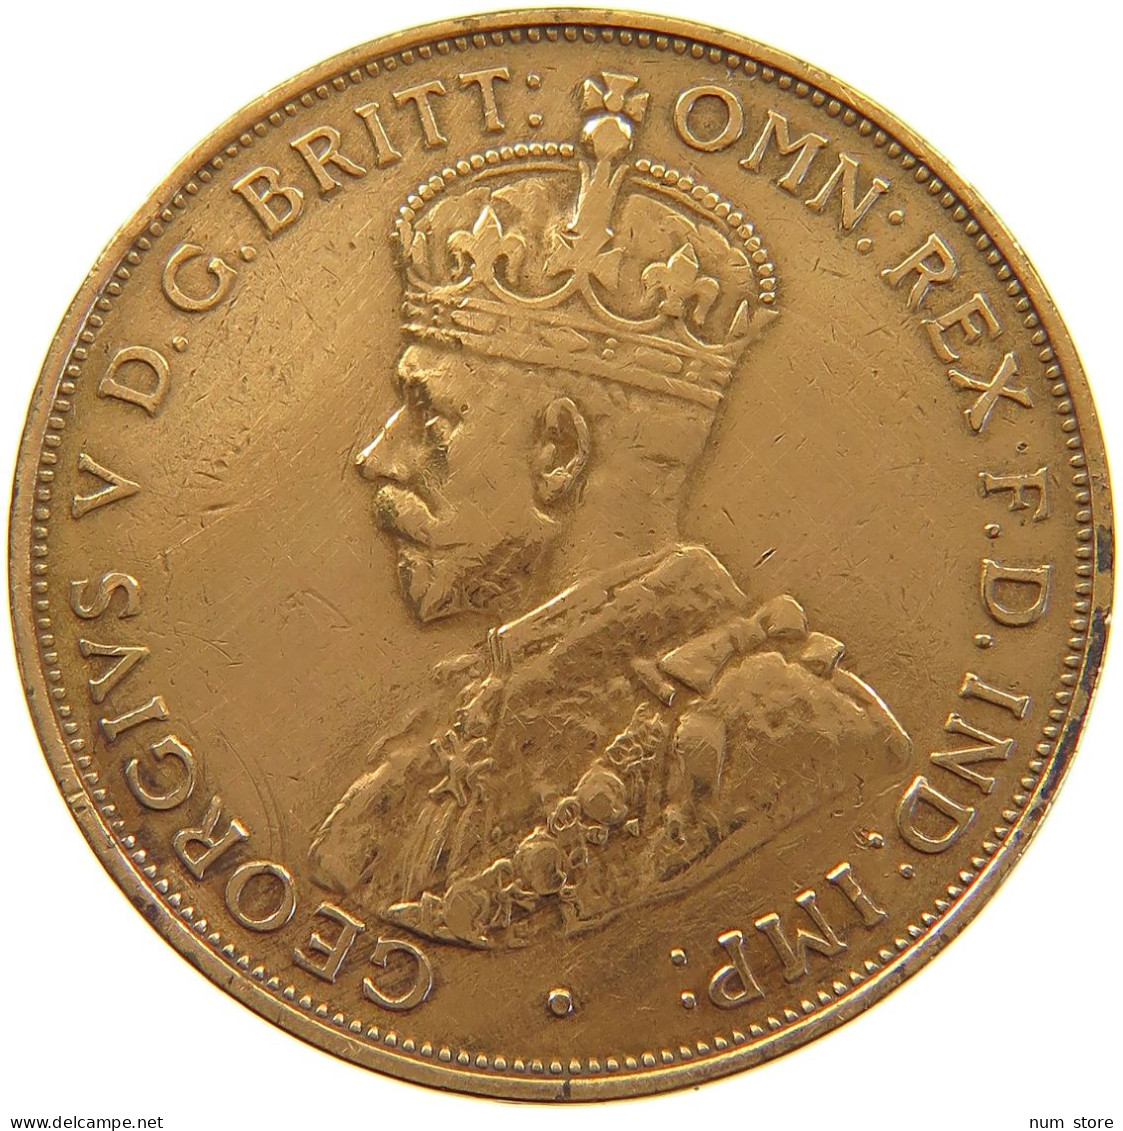 AUSTRALIA PENNY 1936 George V. (1910-1936) #t157 0513 - Penny